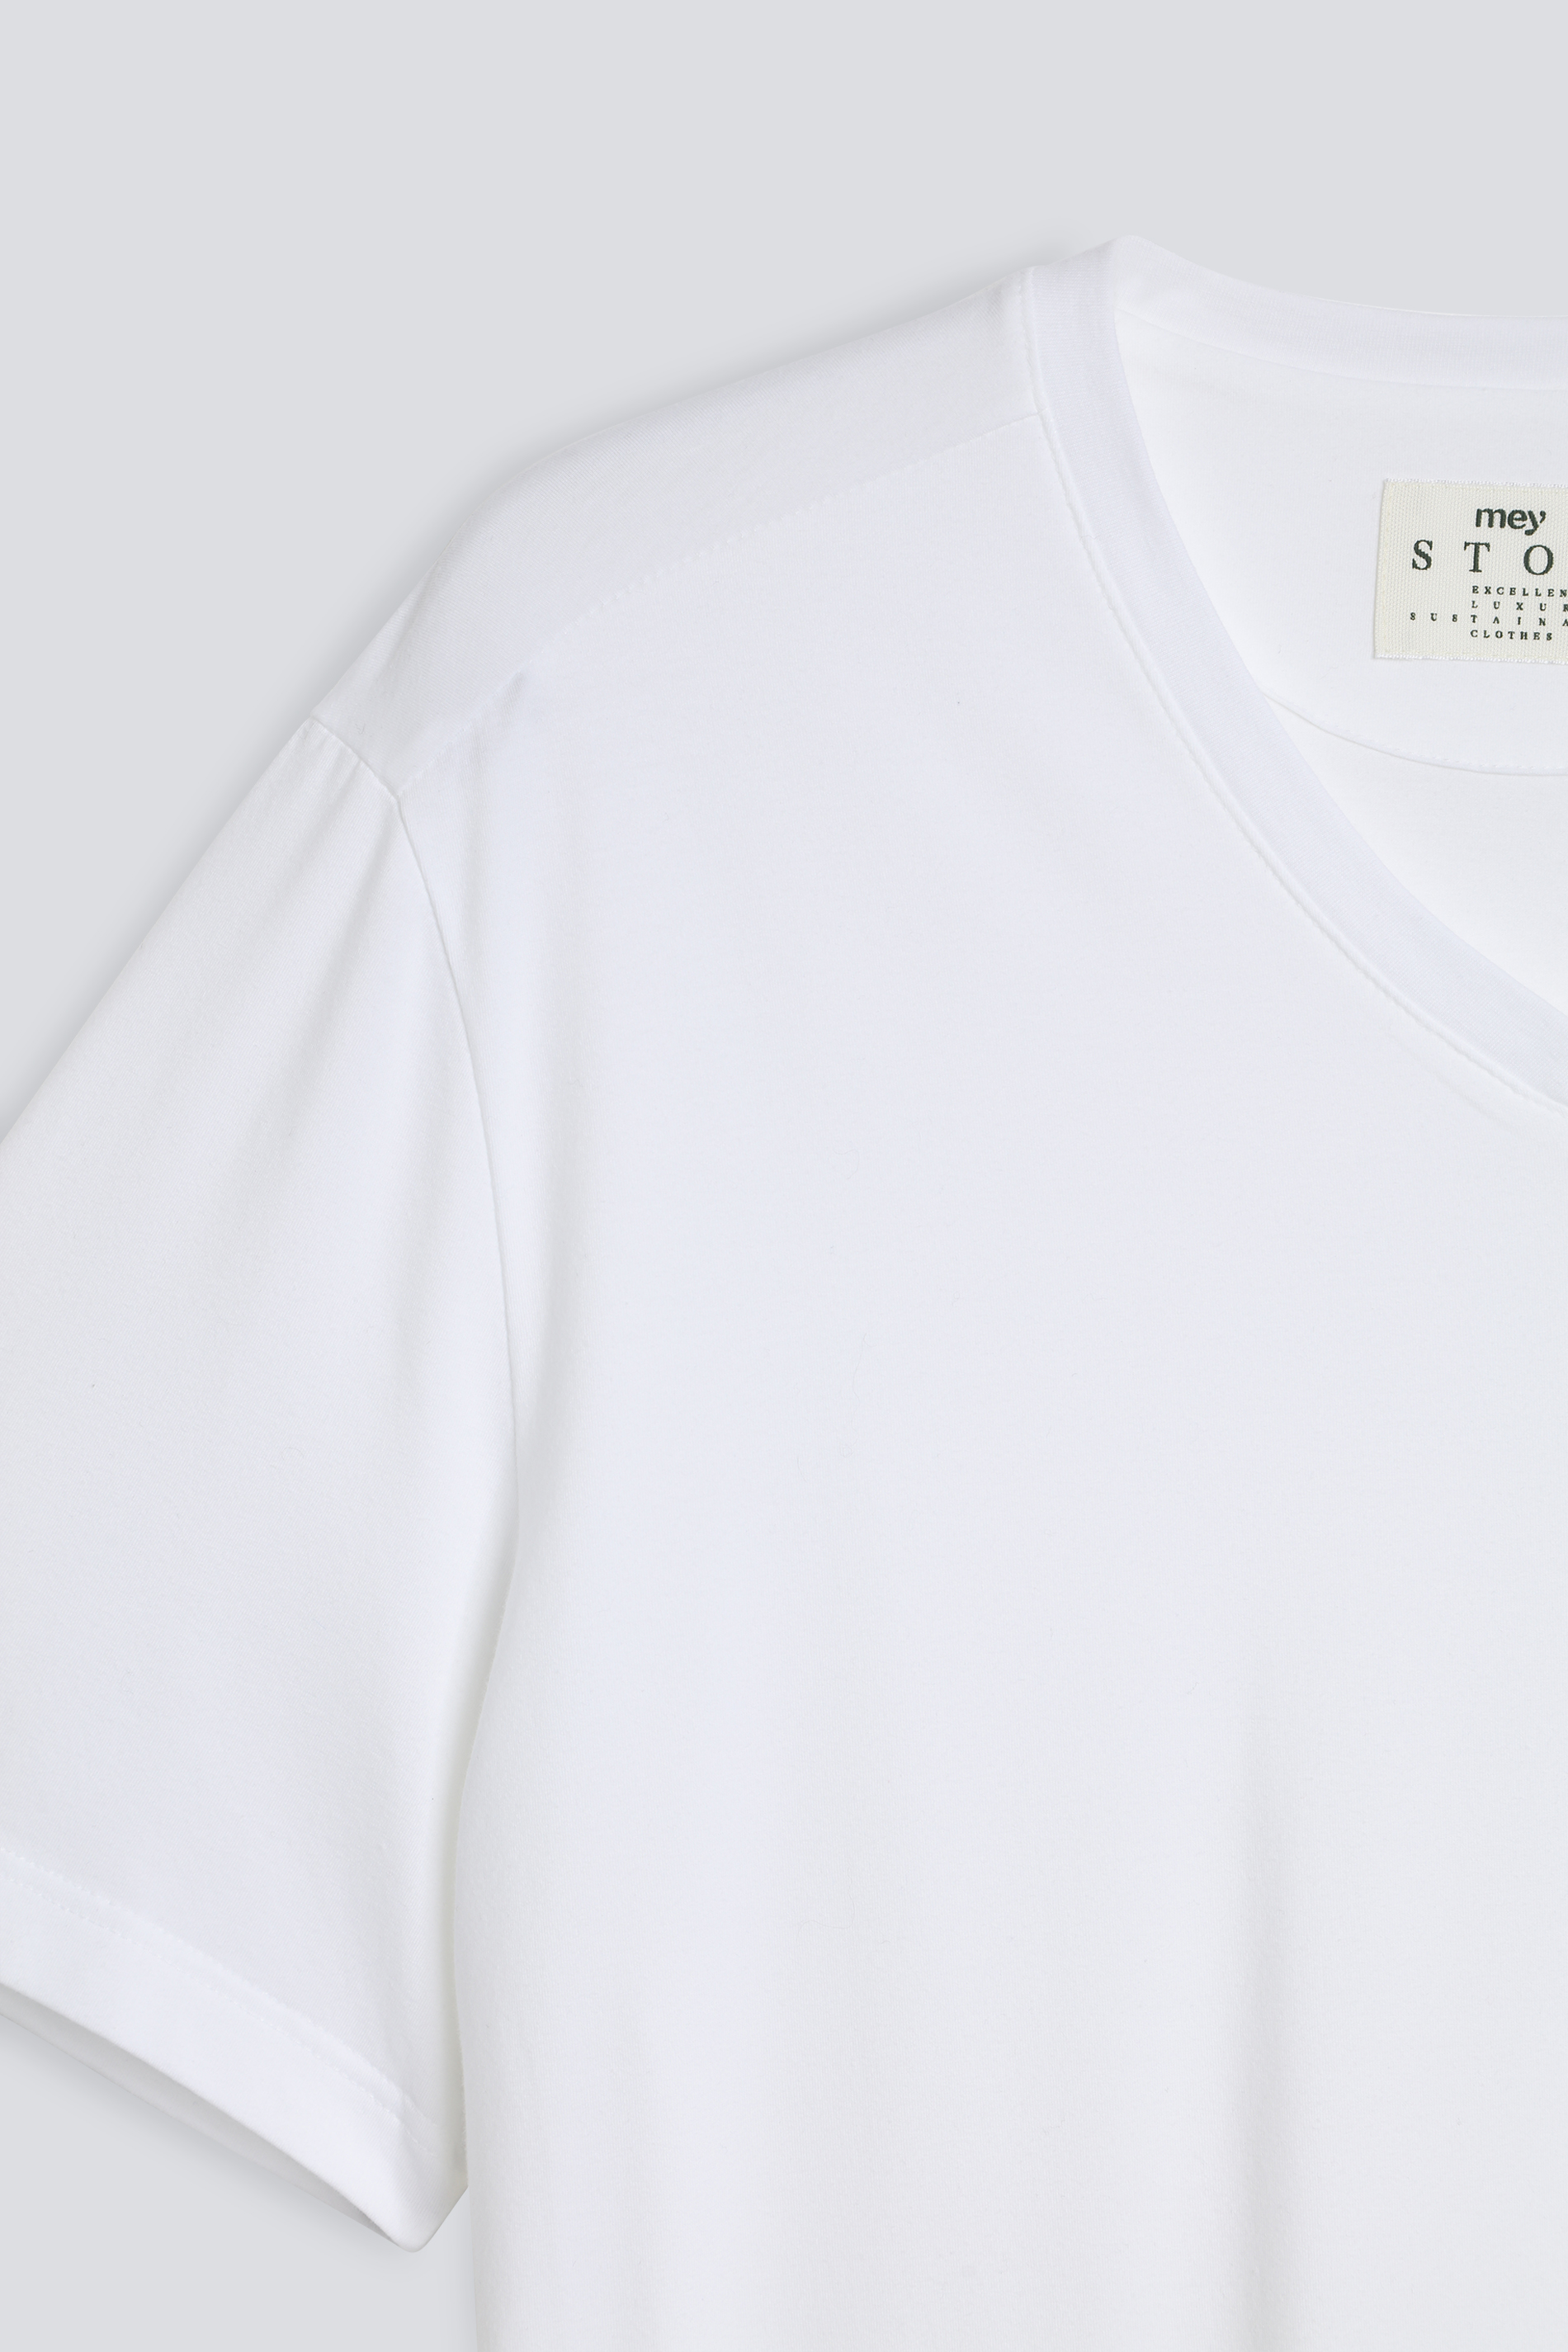 T-shirt Serie Cotone Strech Detail View 01 | mey®